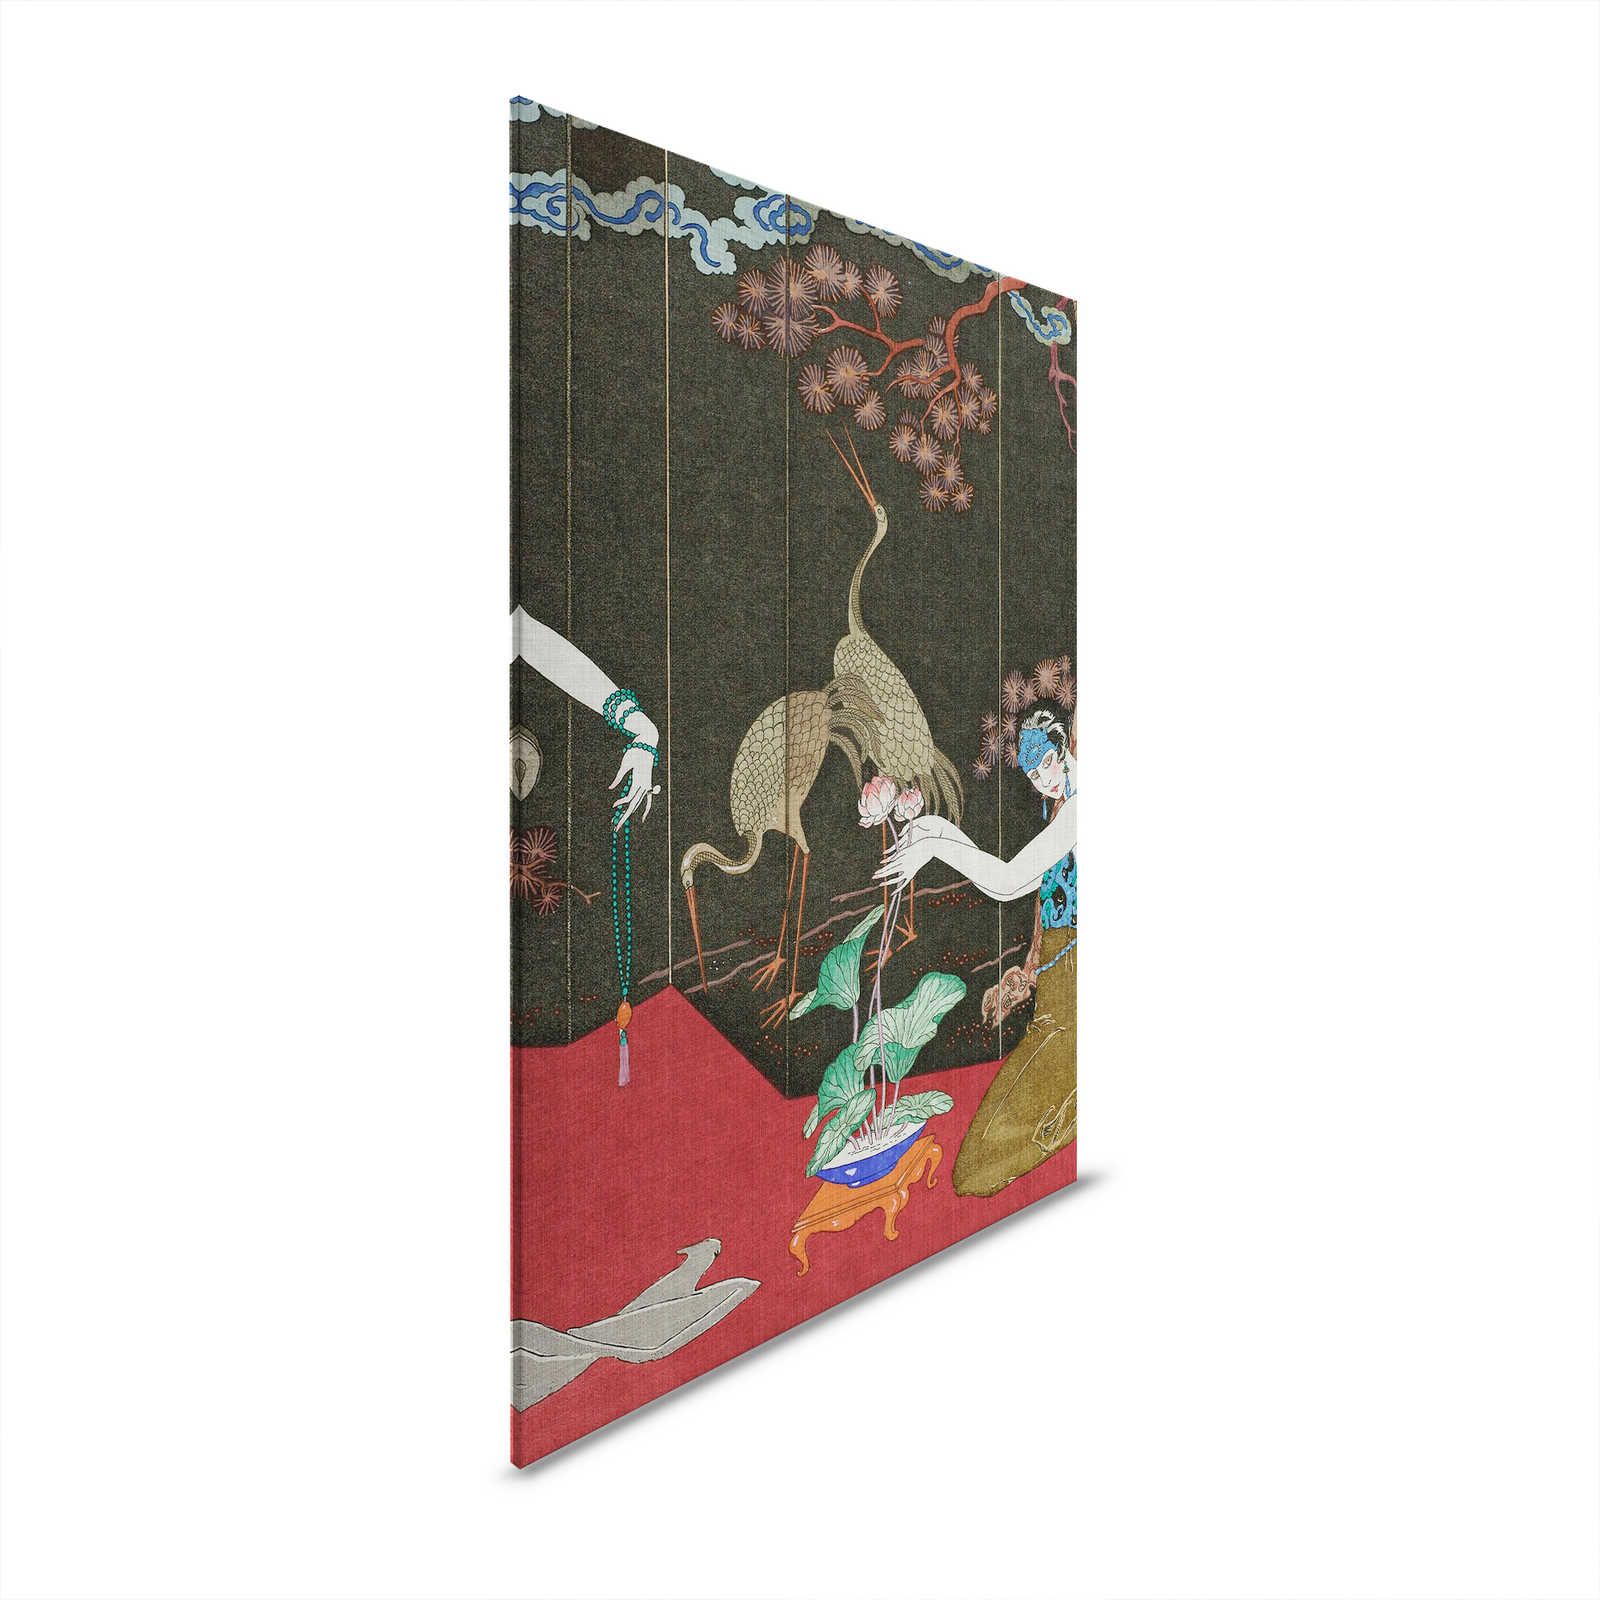         Babylon 1 - Canvas painting art print Classic Asian Inspired - 0,90 m x 0,60 m
    